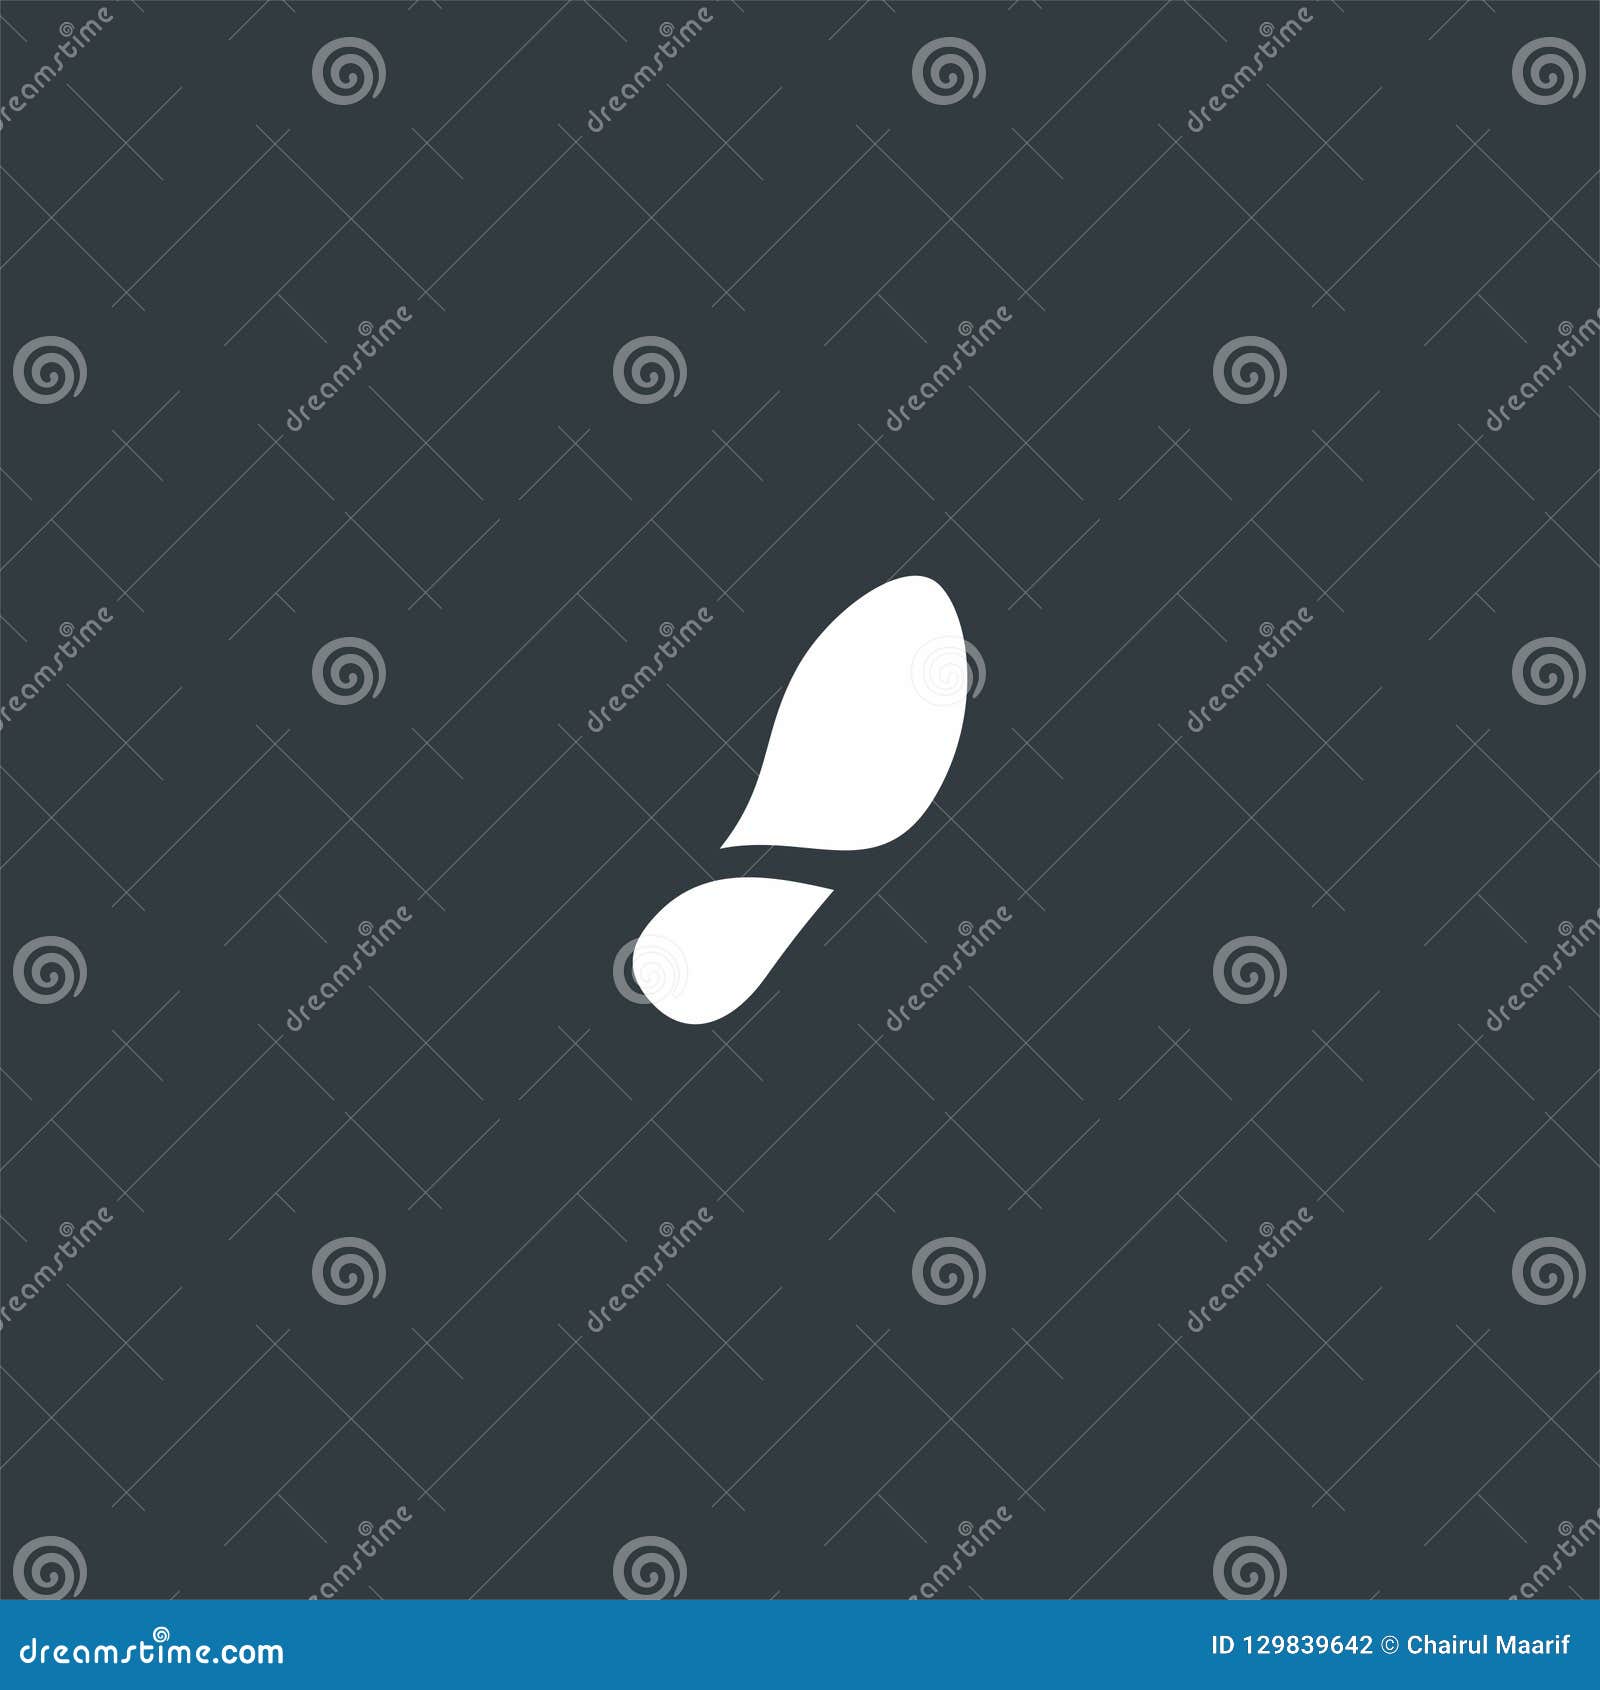 Footprint Of Shoes Logo Design Stock Vector Illustration Of